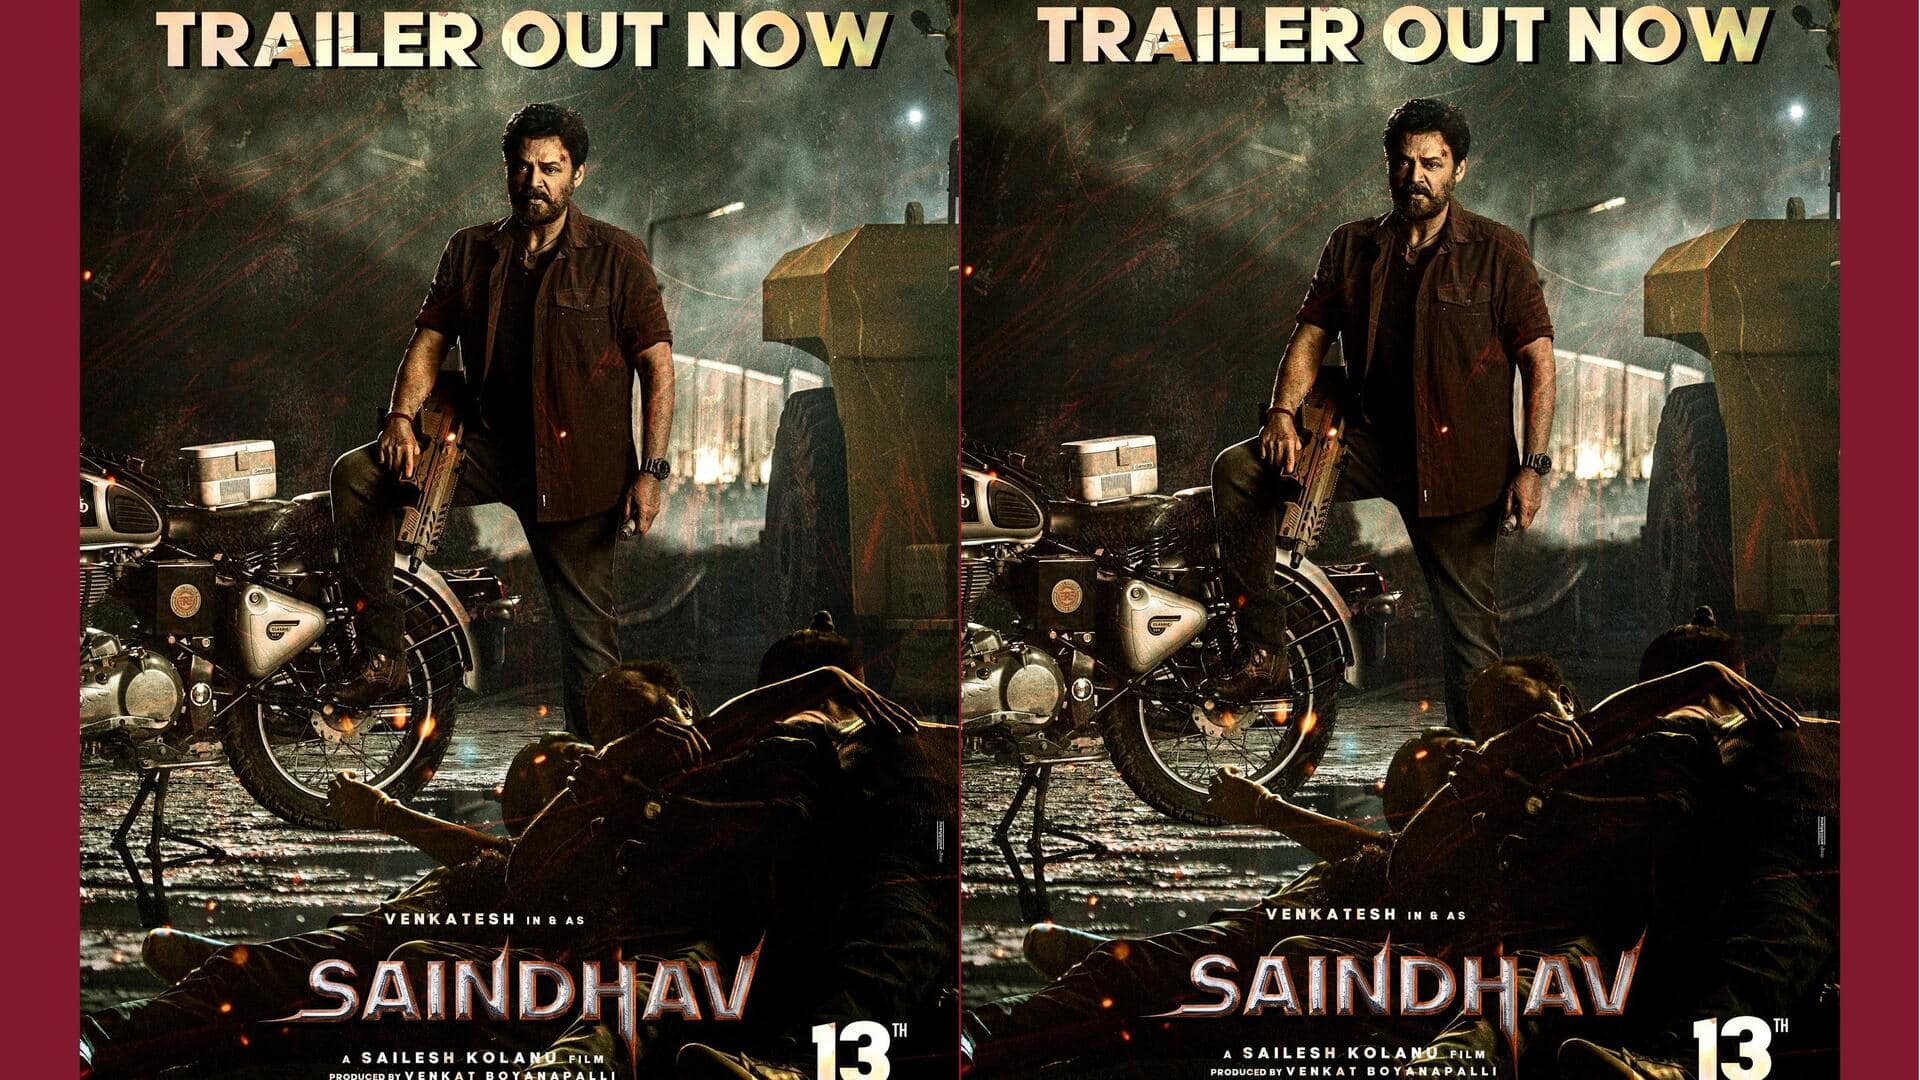 Saindhav trailer: సూపర్ ఎమోషన్స్ తో వెంకీ.. అదిరిపోయిన సైంధవ్‌ ట్రైలర్ 